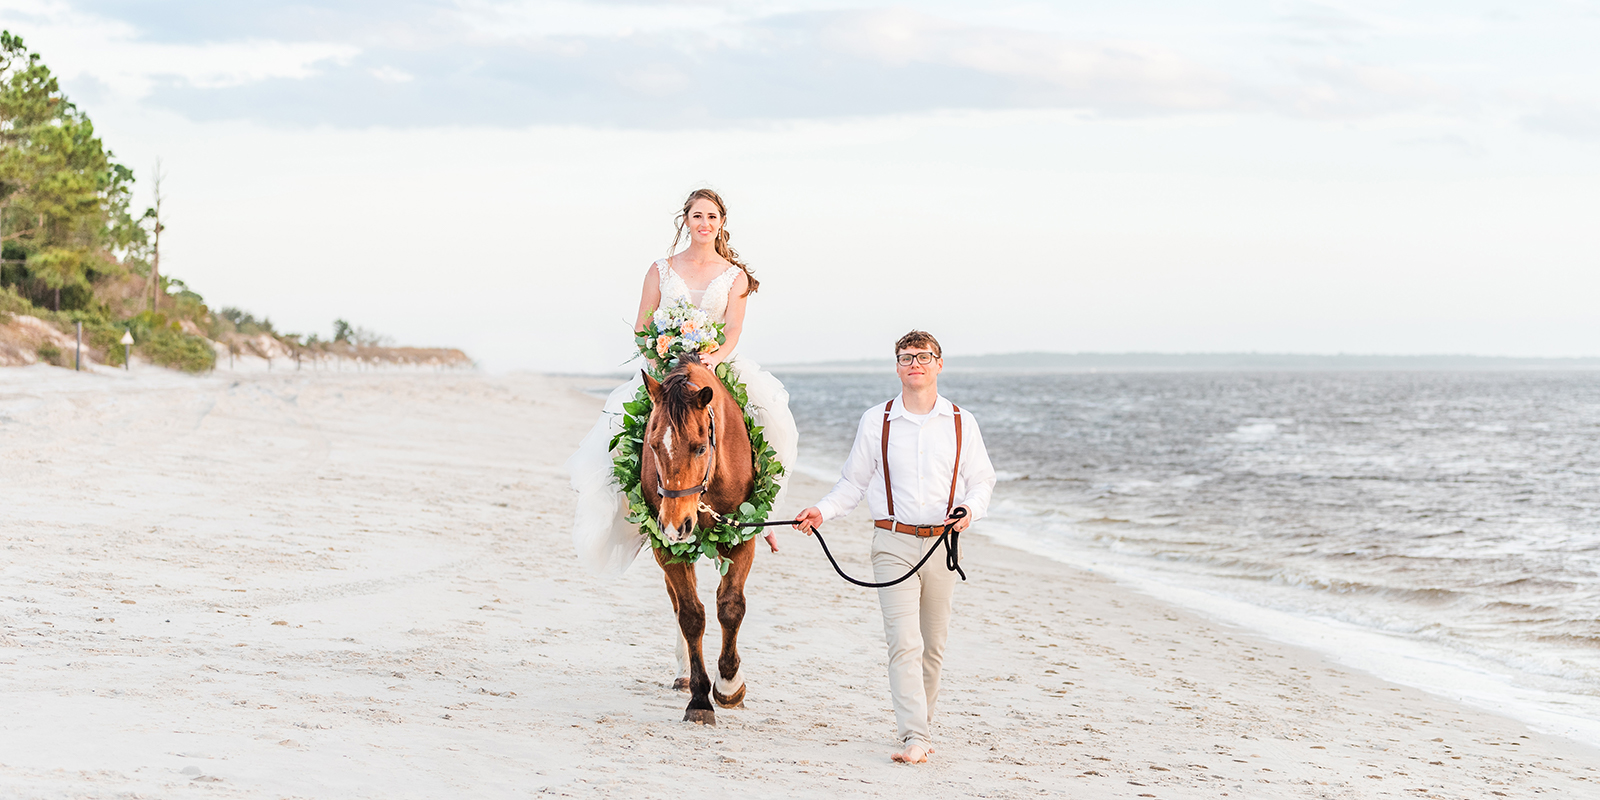 Horses on the beach at a wedding